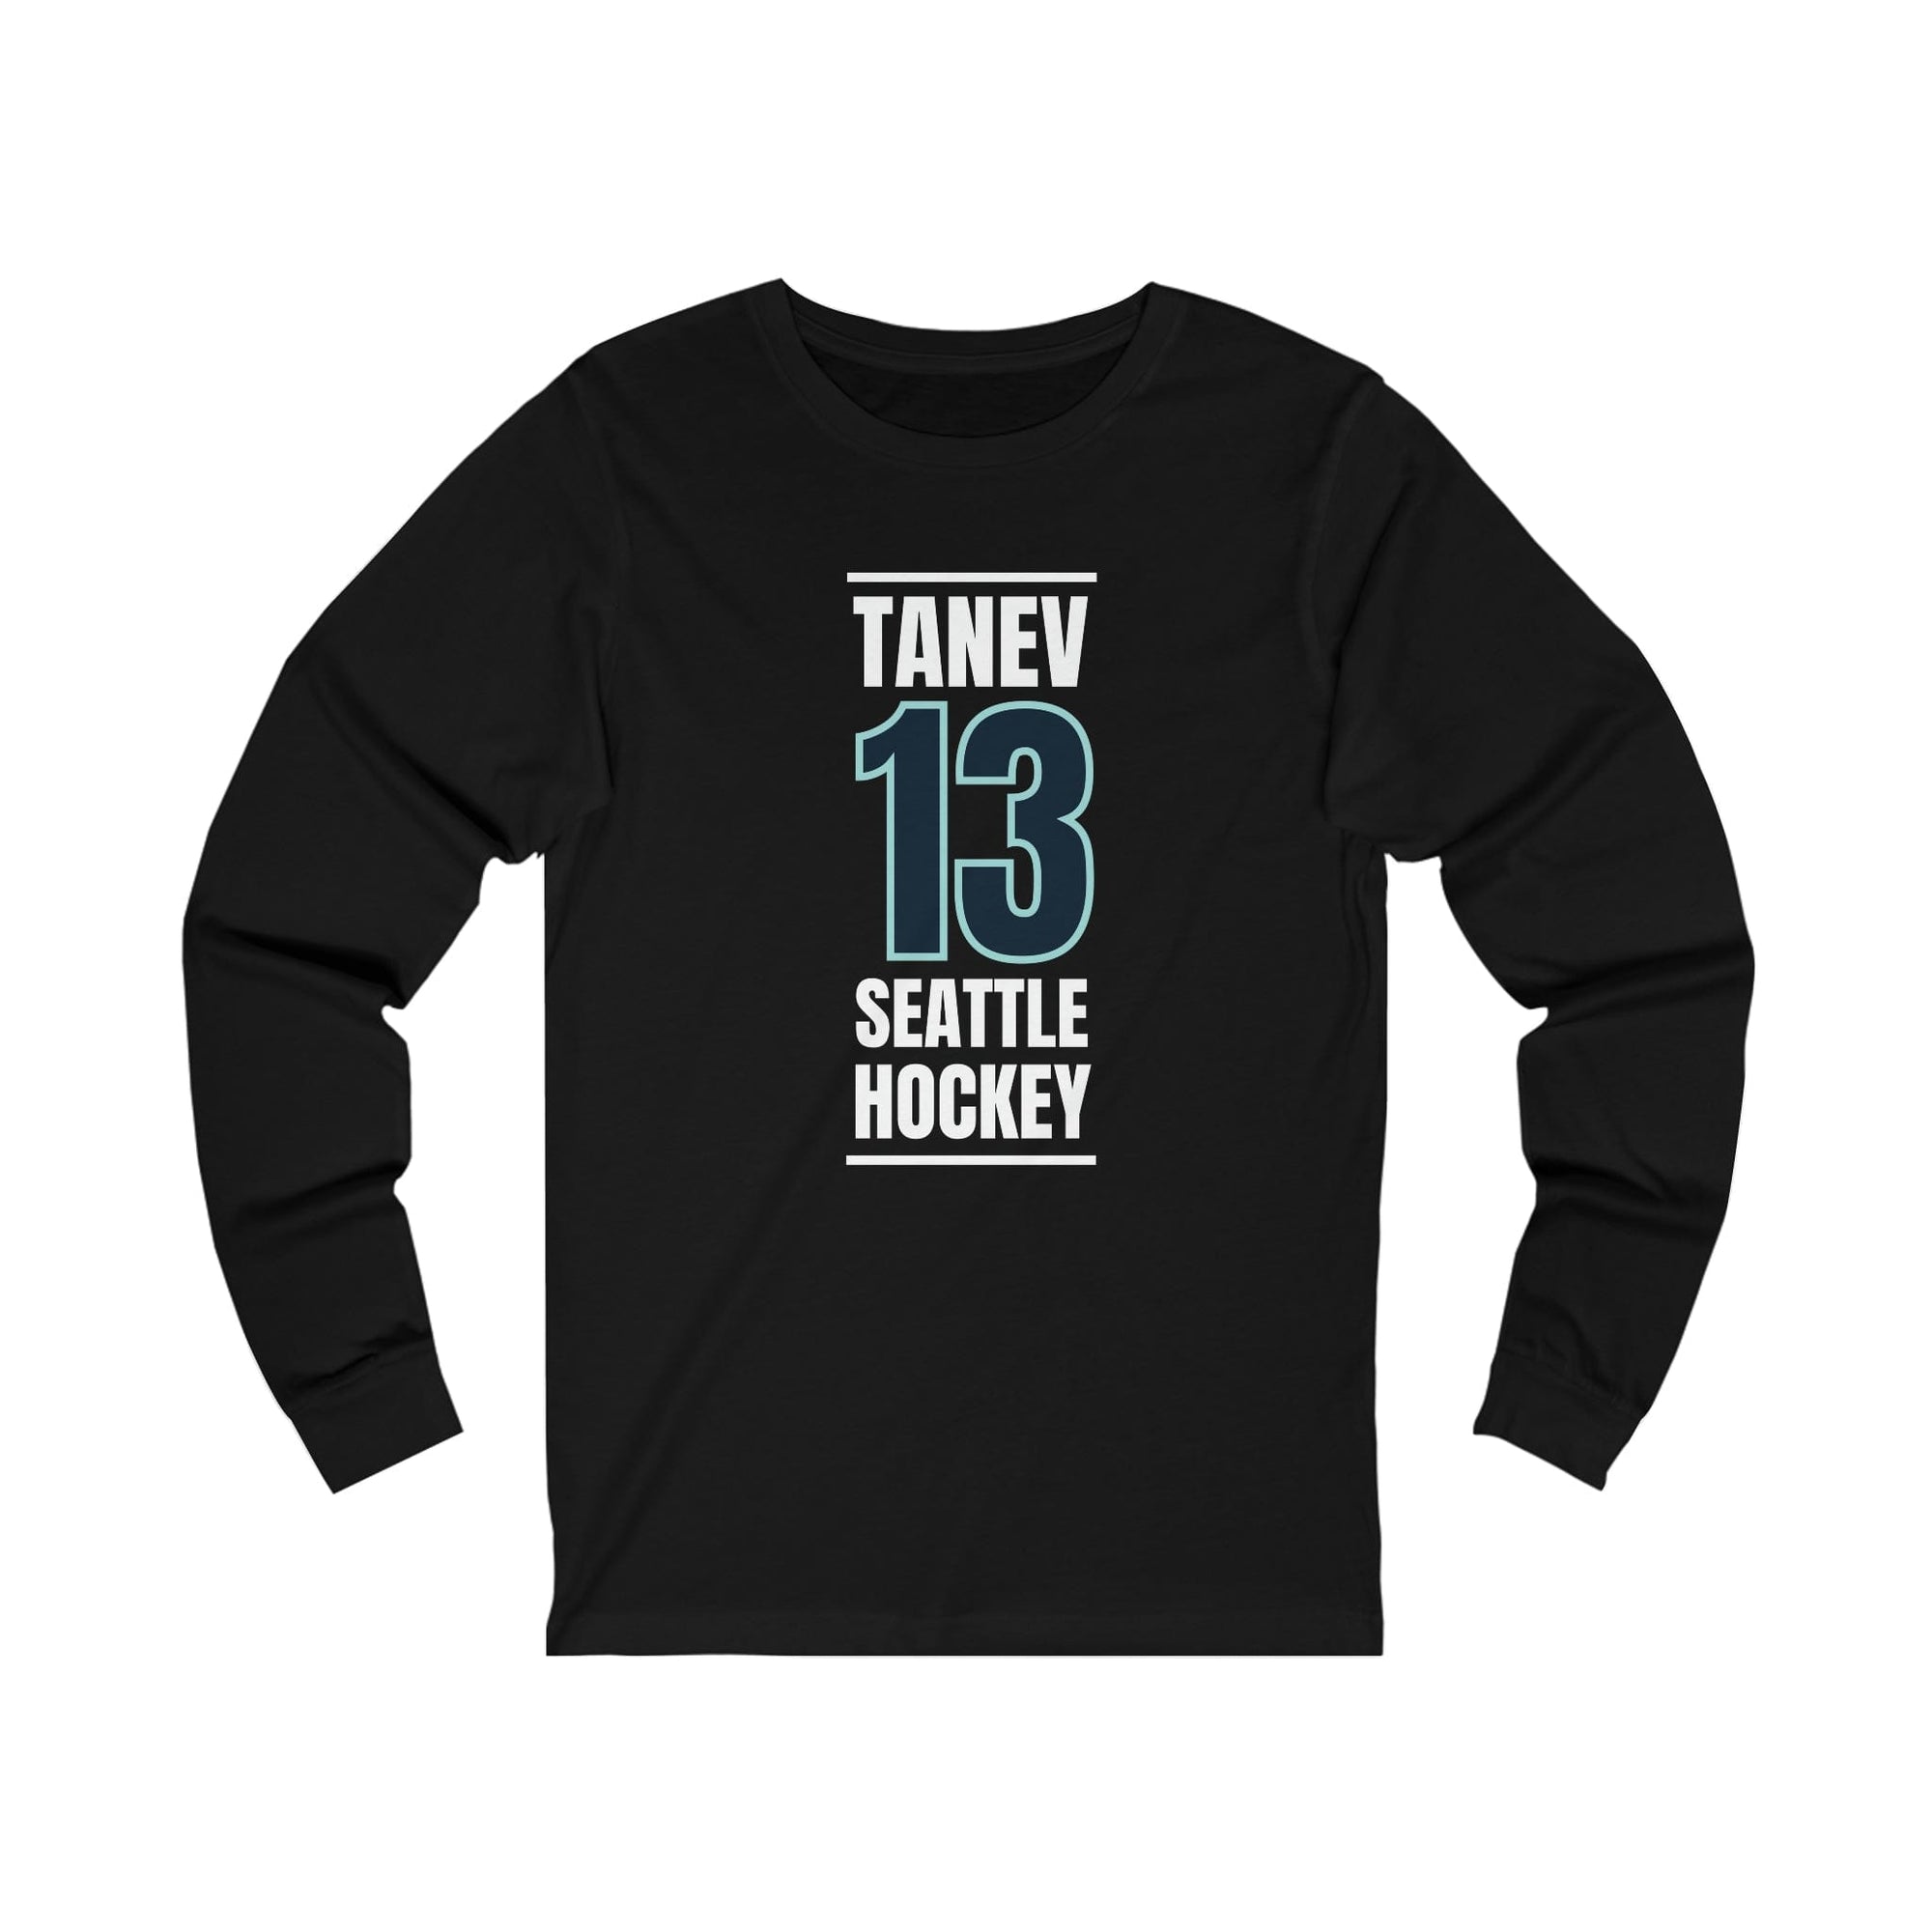 Long-sleeve Tanev 13 Seattle Hockey Black Vertical Design Unisex Jersey Long Sleeve Shirt